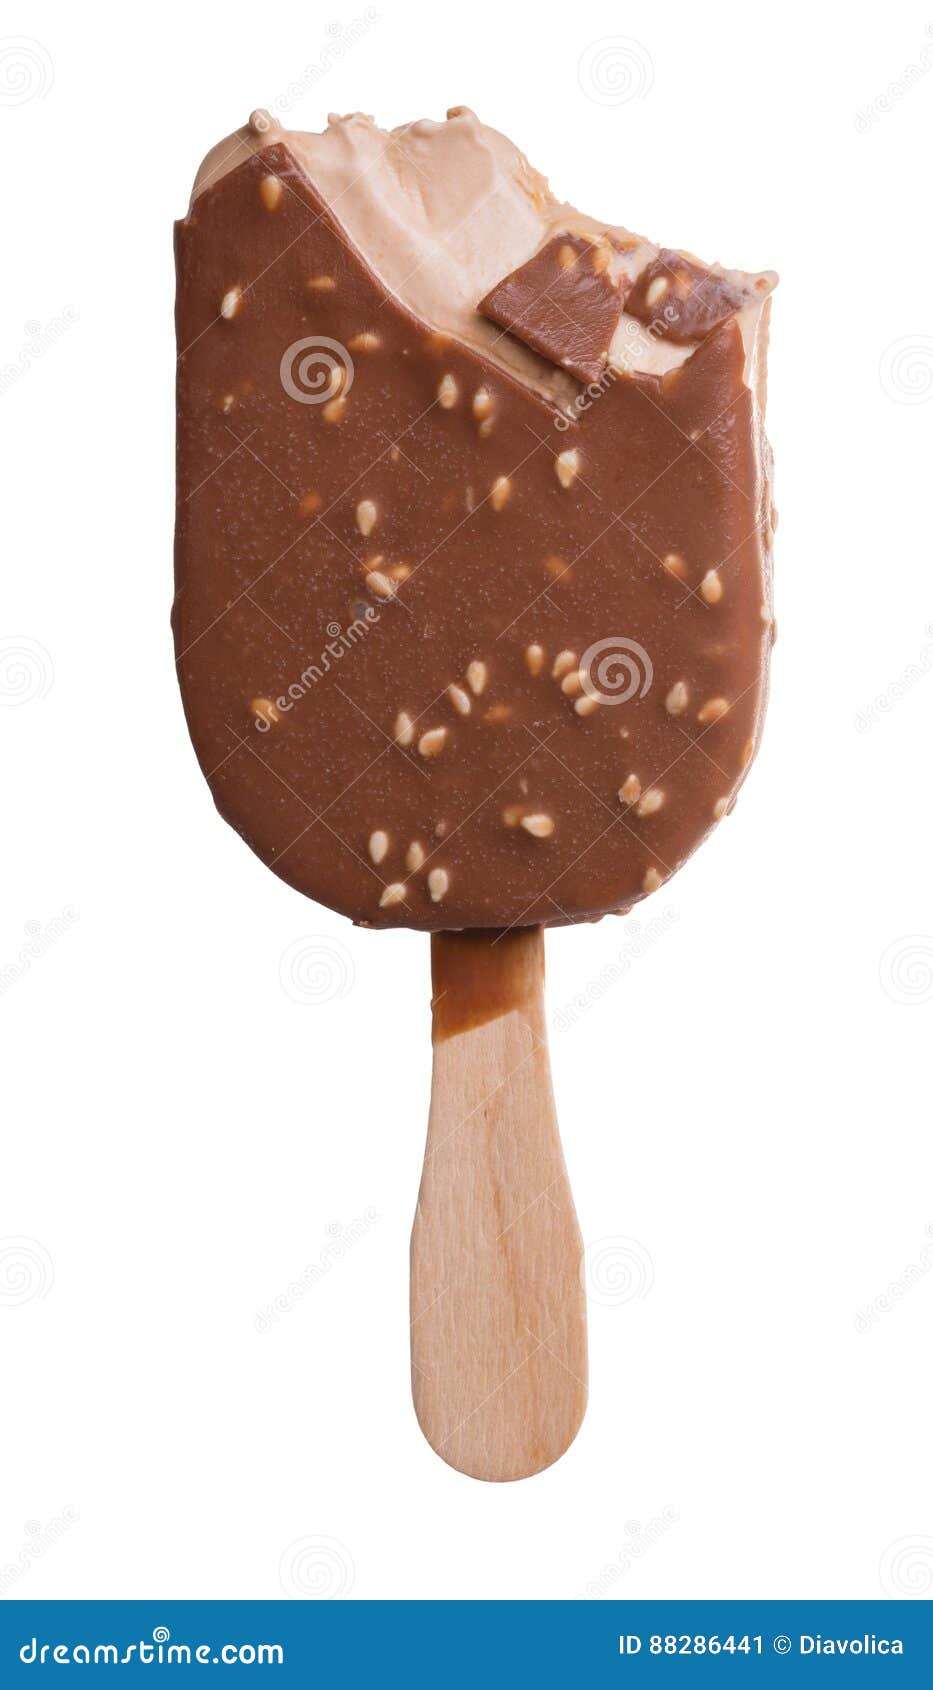 Ice Cream on Stick in Chocolate Glaze Stock Image - Image of cream ...